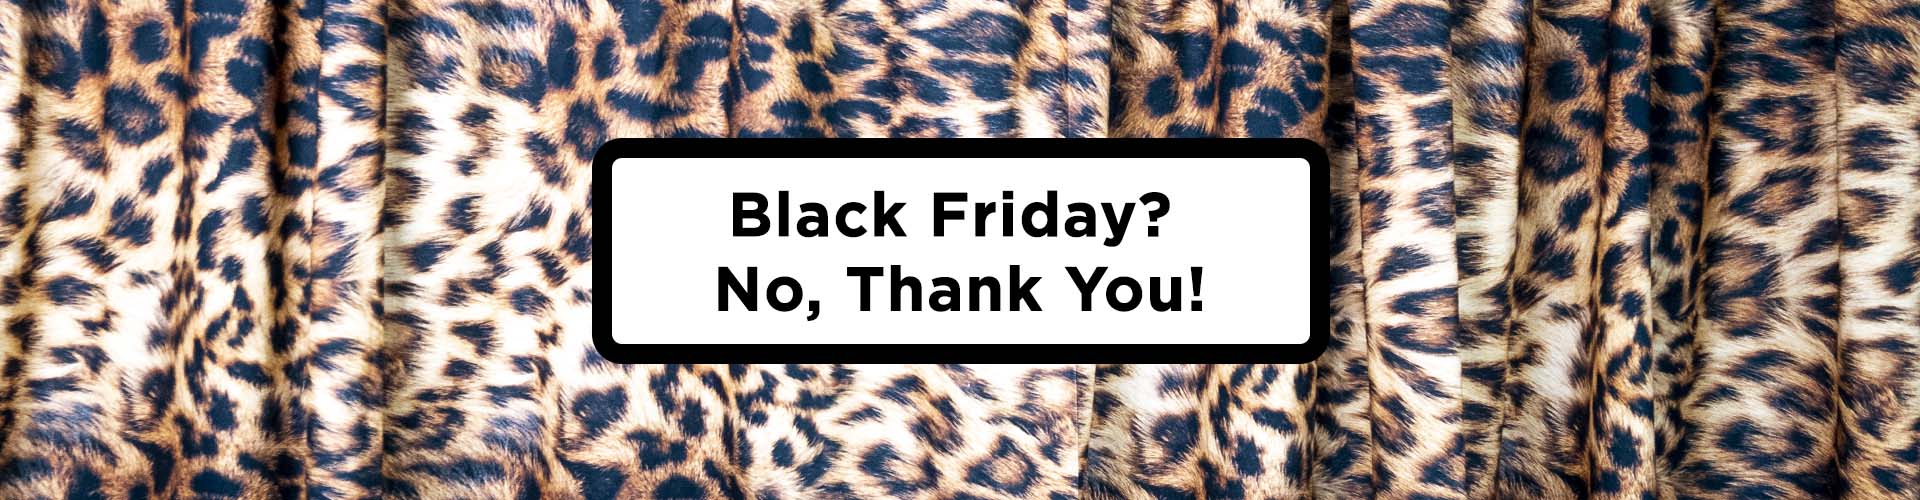 Black Friday? No, thank you!